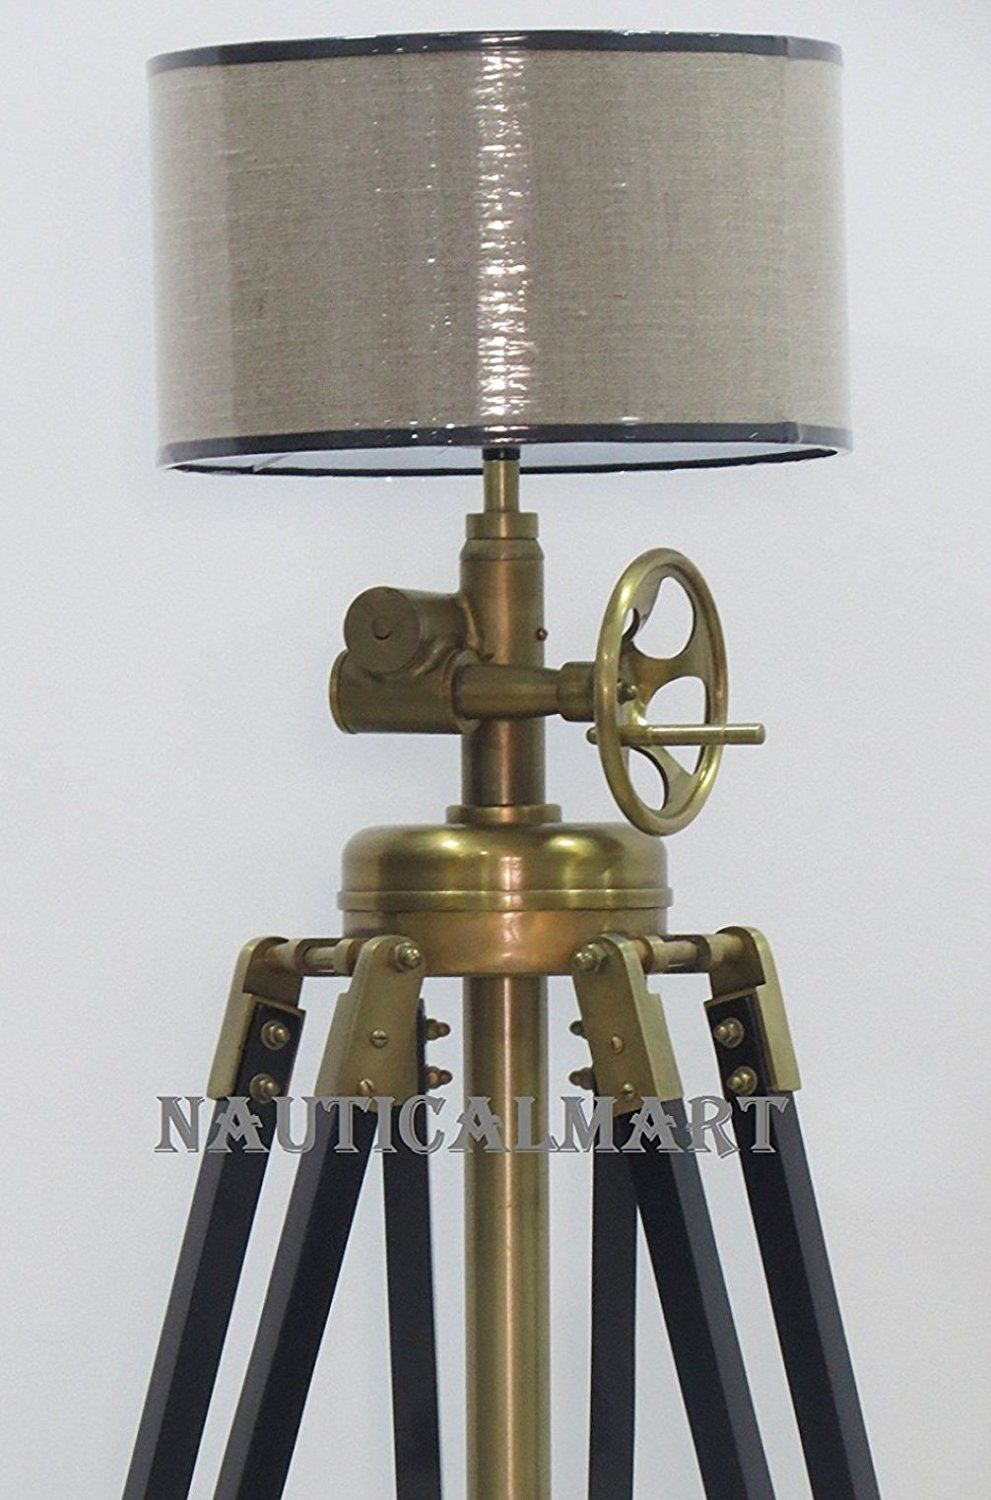 Al Nurayn Nautical Royal Marine Tripod Floor Lamp pertaining to size 991 X 1500